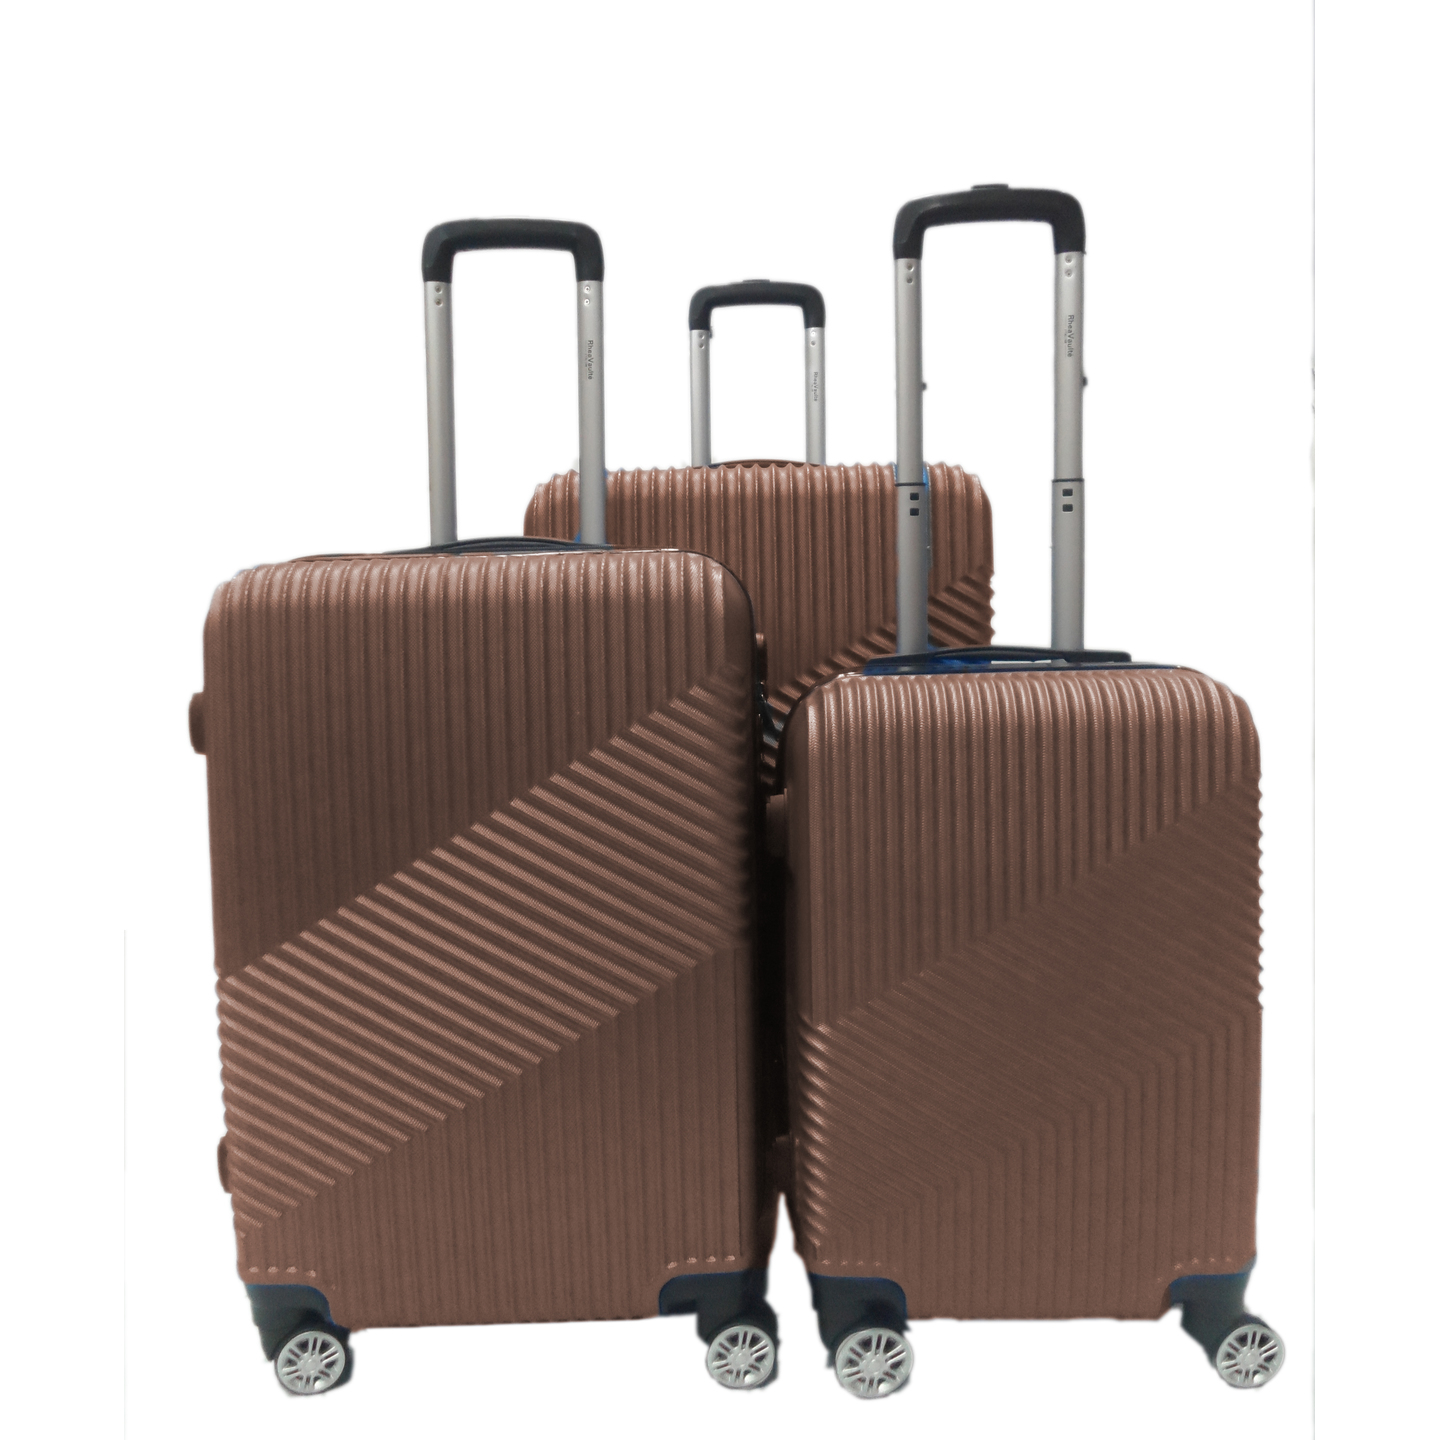 Rv-52 Elegant Hard Box Luggage Expandable 20 inch,24 inch, 28 inch